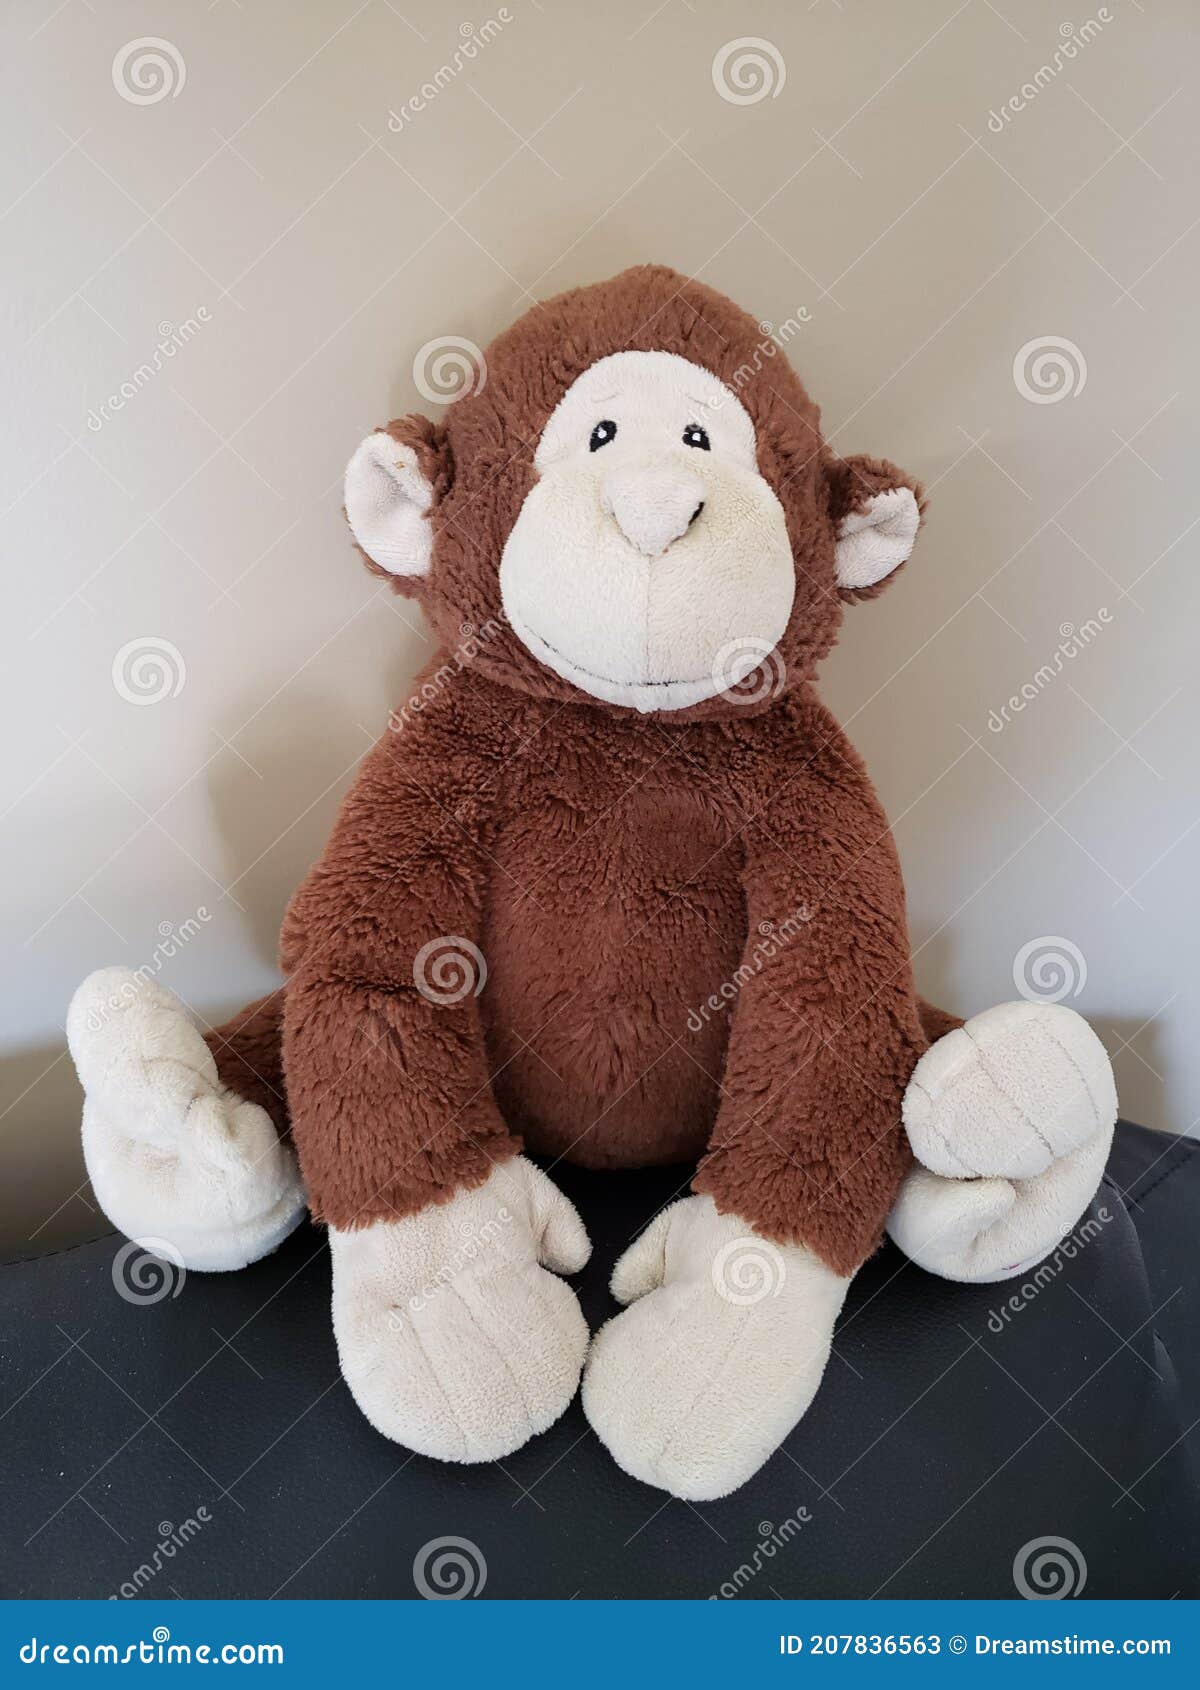 Peluche Mono Peluche Juguete Sentado Pacientemente Imagen de archivo -  Imagen de animal, mascota: 207836563